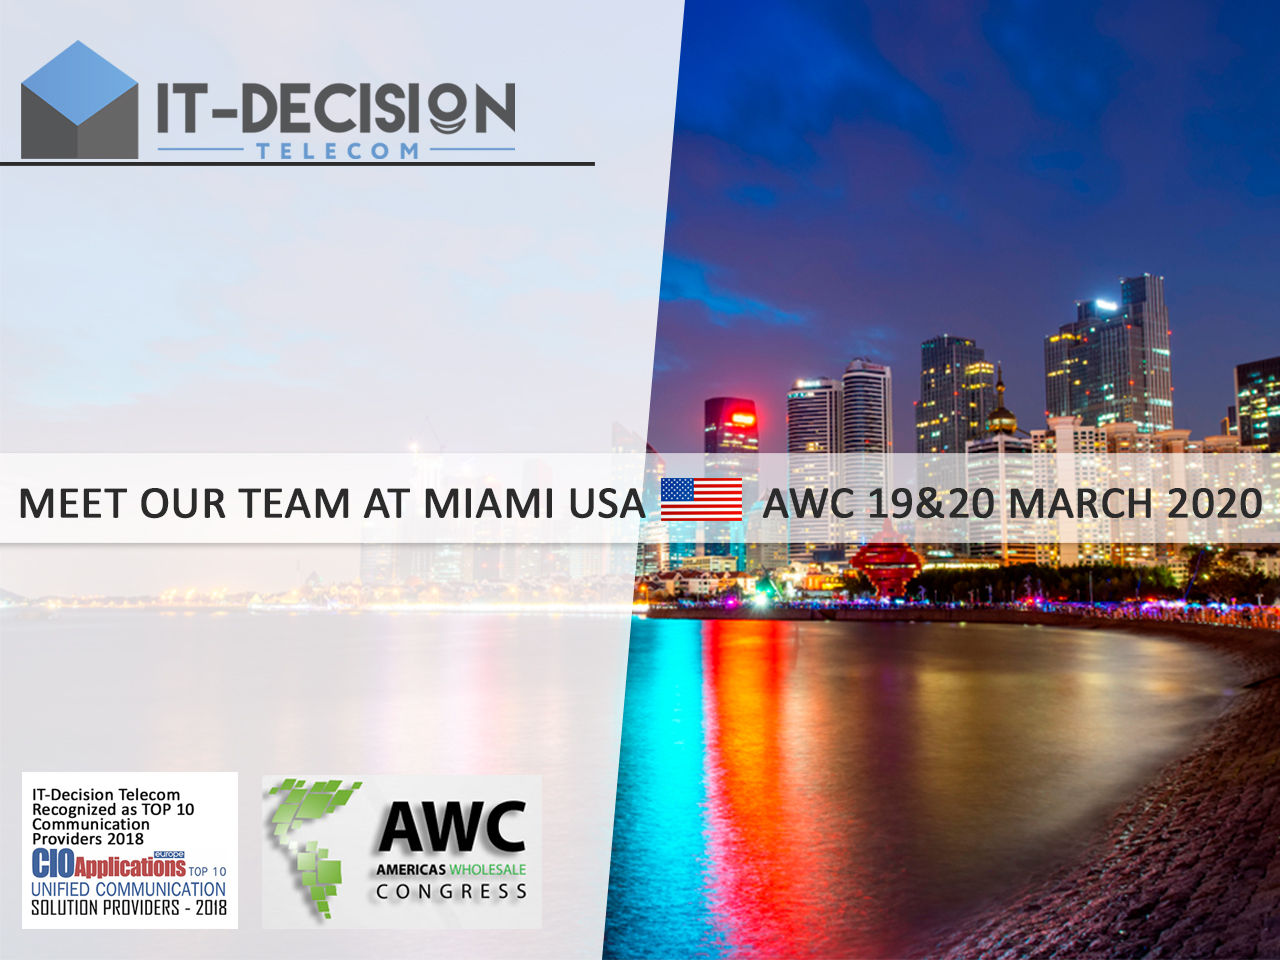 ITD Telecom - Sponsor of AWC 2020 in Miami!